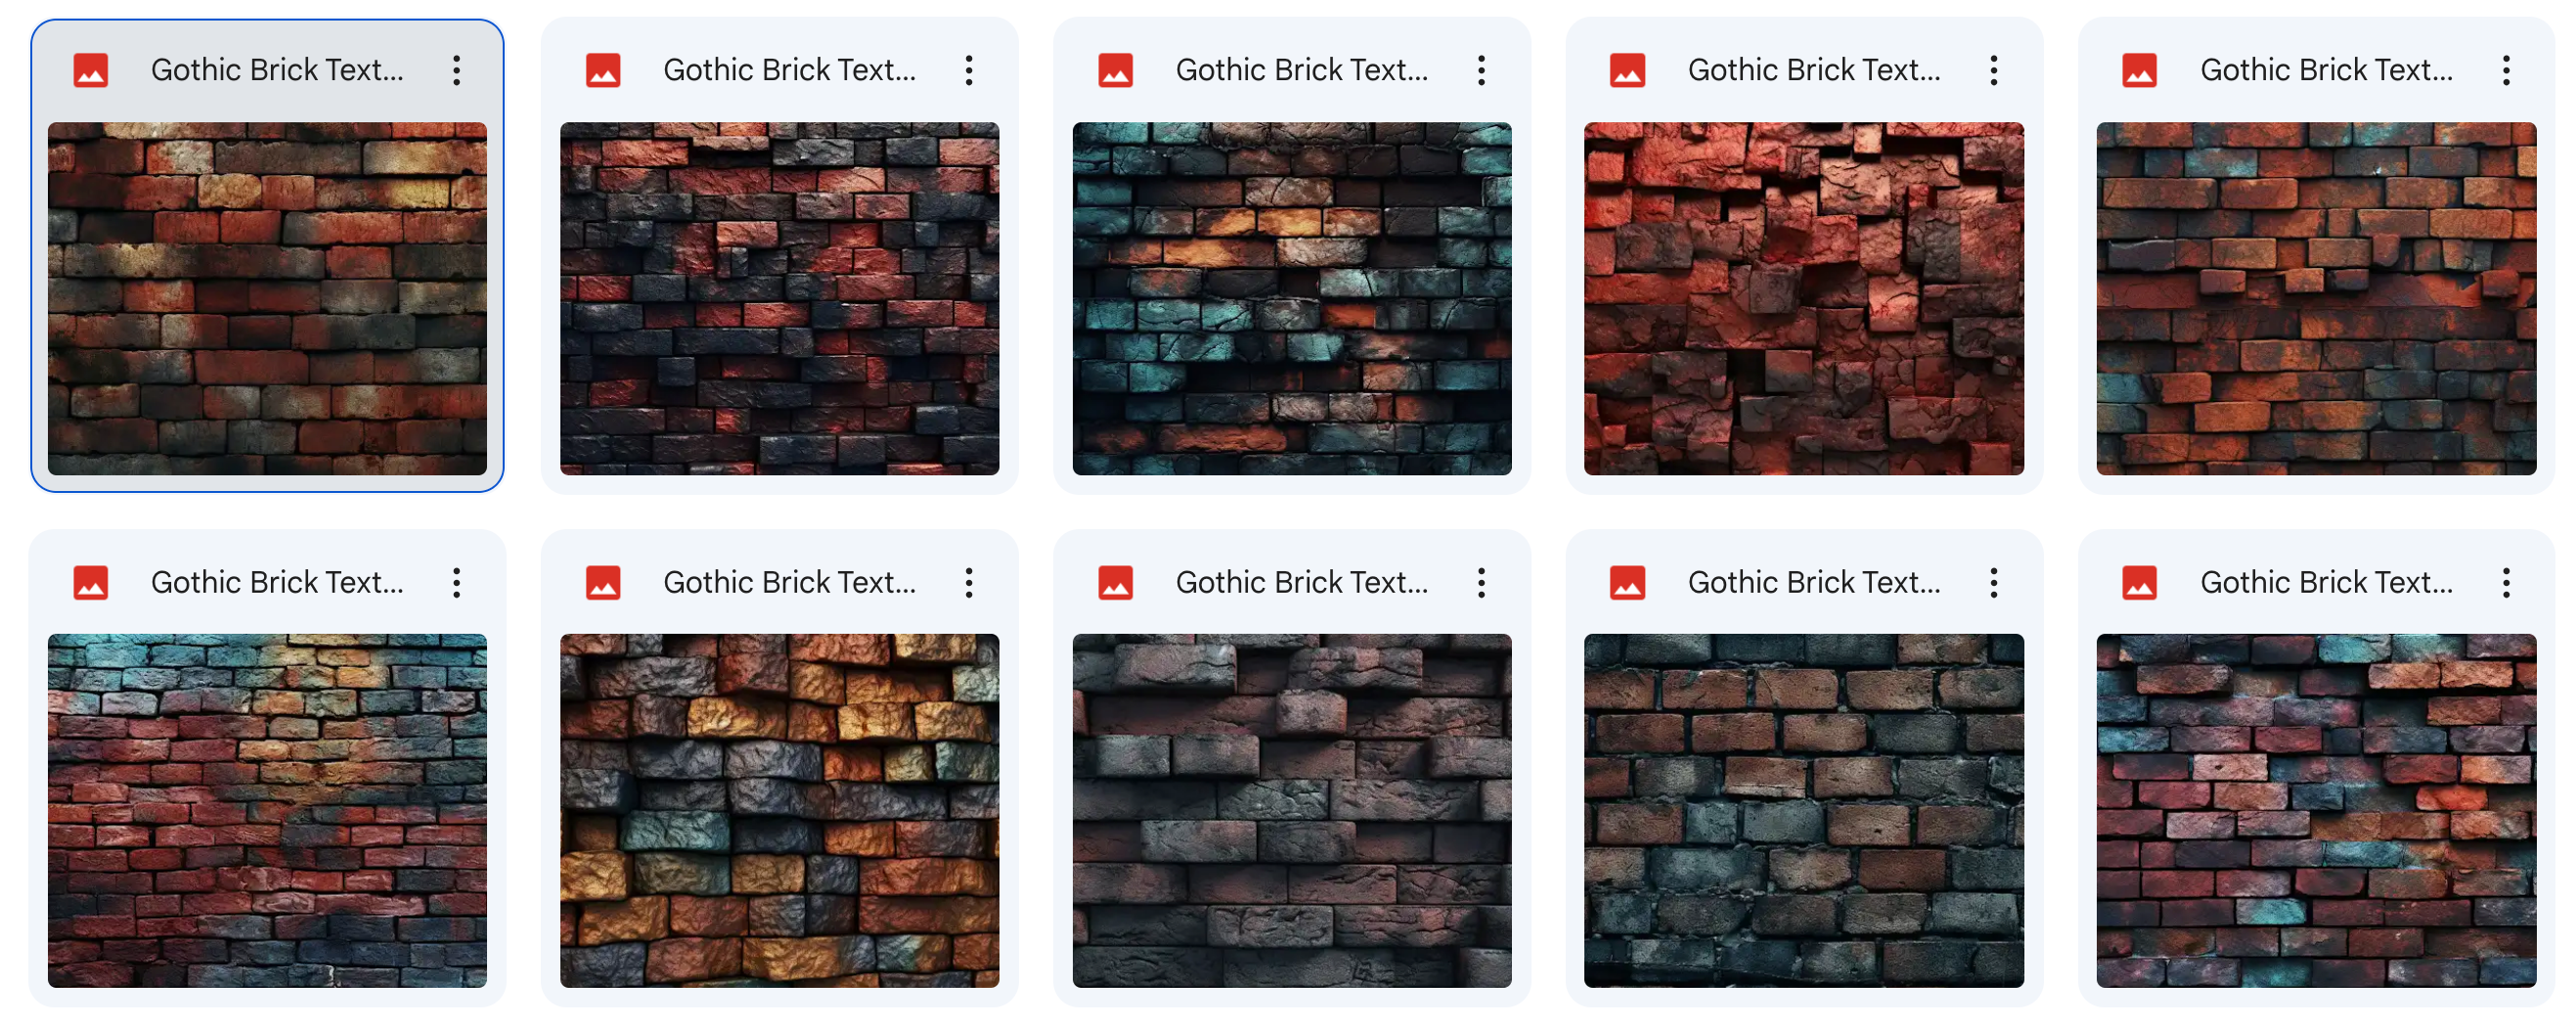 Magical Gothic Brick Textures - Meg Bitton Productions